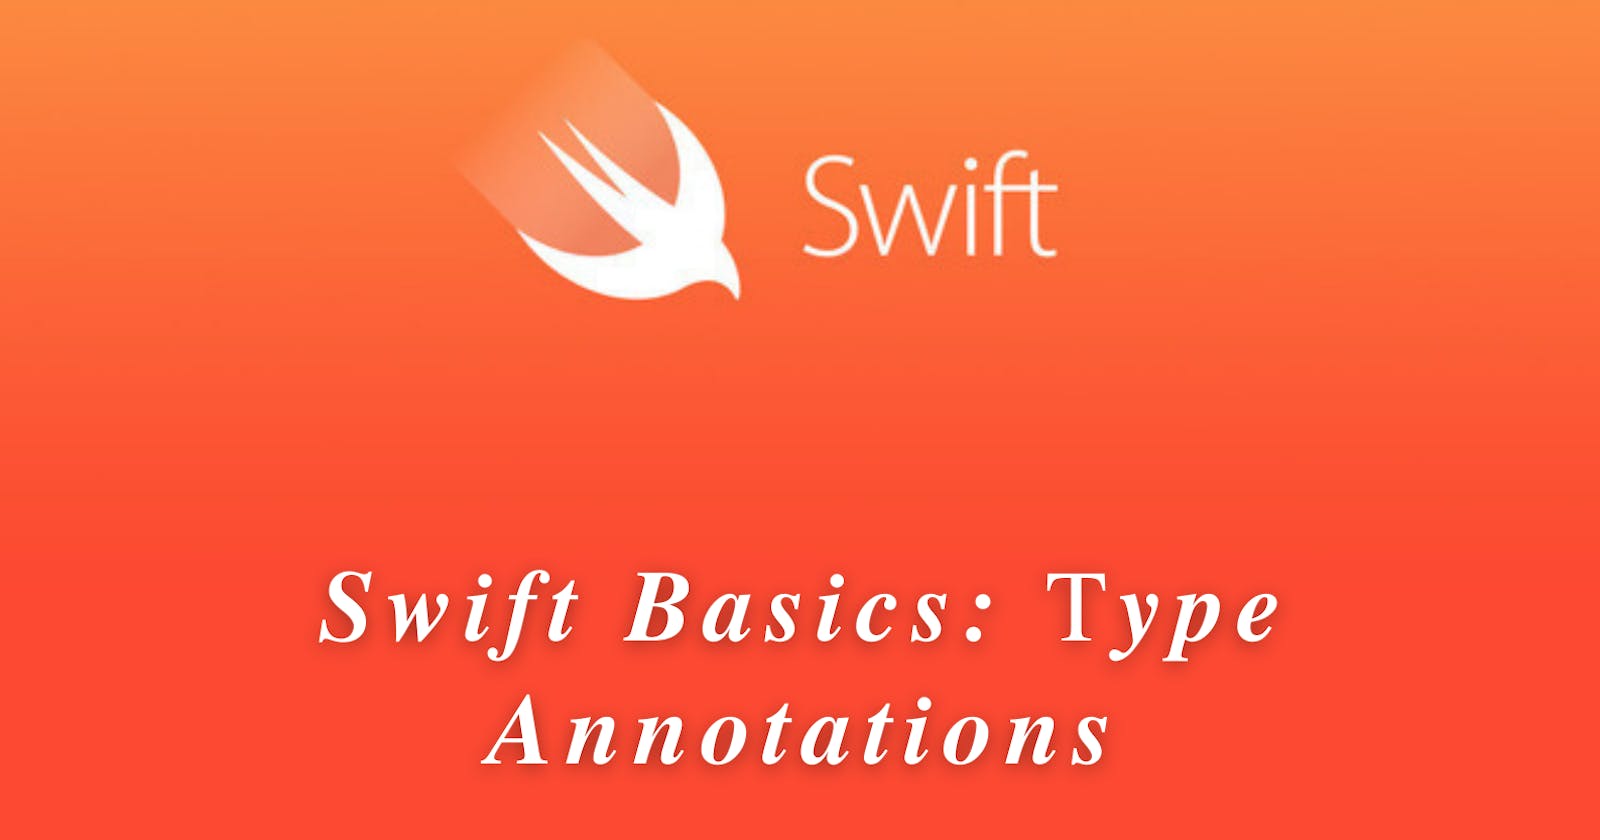 Swift Basics: Type Annotations